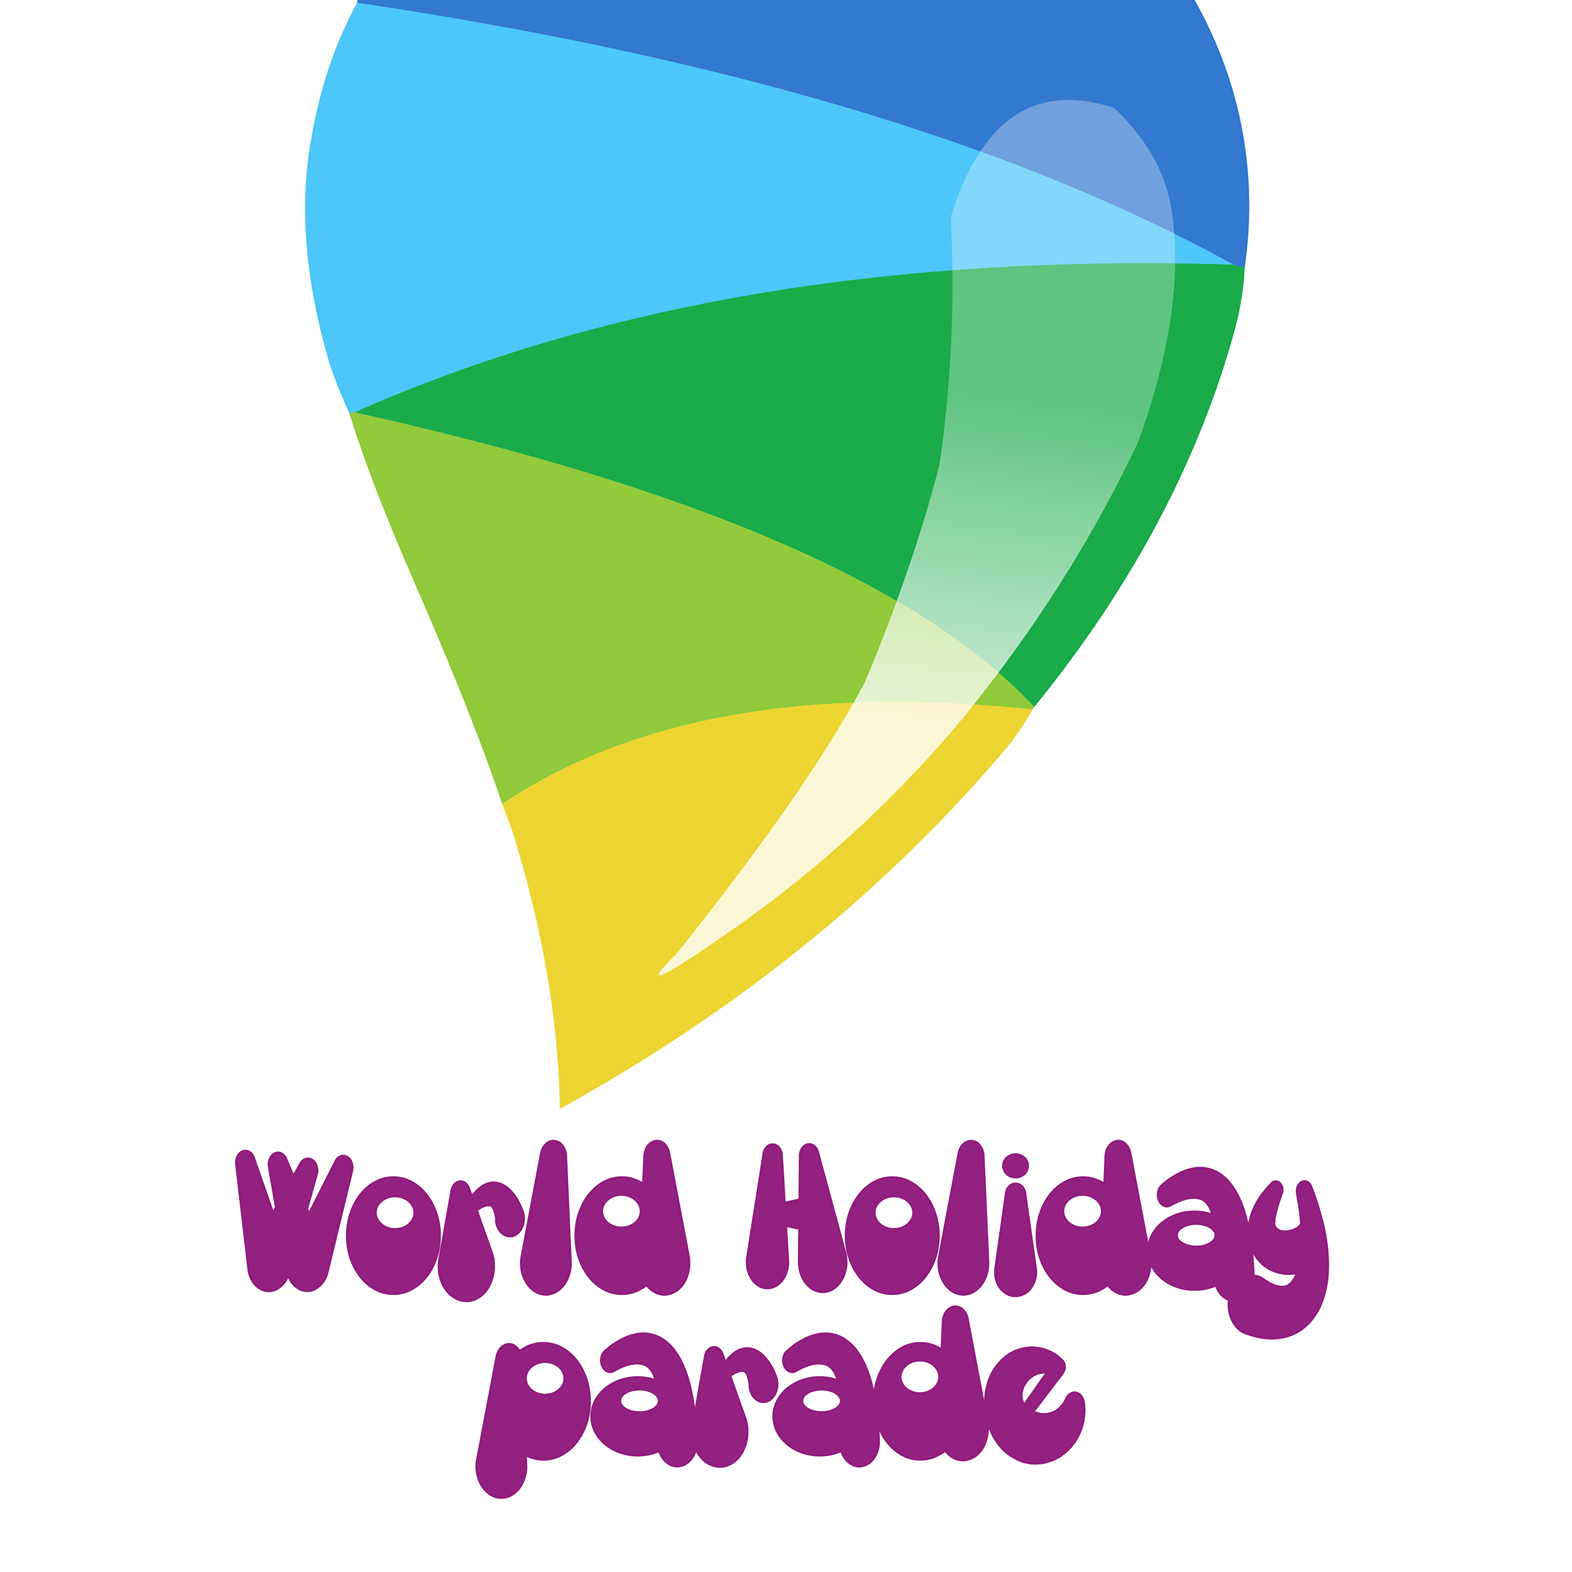 World Holiday Parades